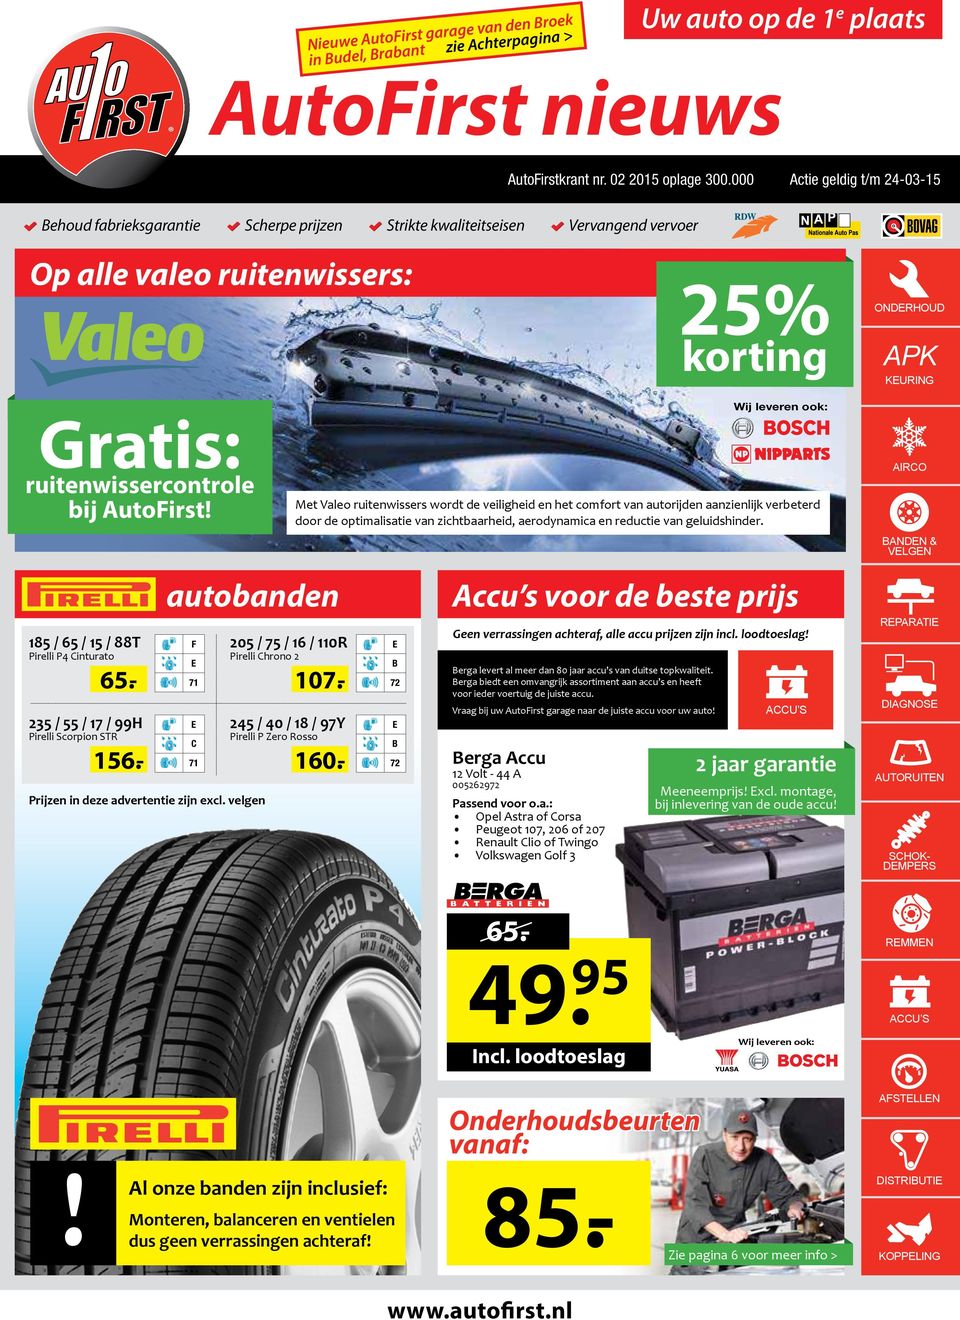 AutoFirst! 185 / 65 / 15 / 88T Pirelli P4 inturato 235 / 55 / 17 / 99H Pirelli Scorpion STR autobanden Prijzen in deze advertentie zijn excl.